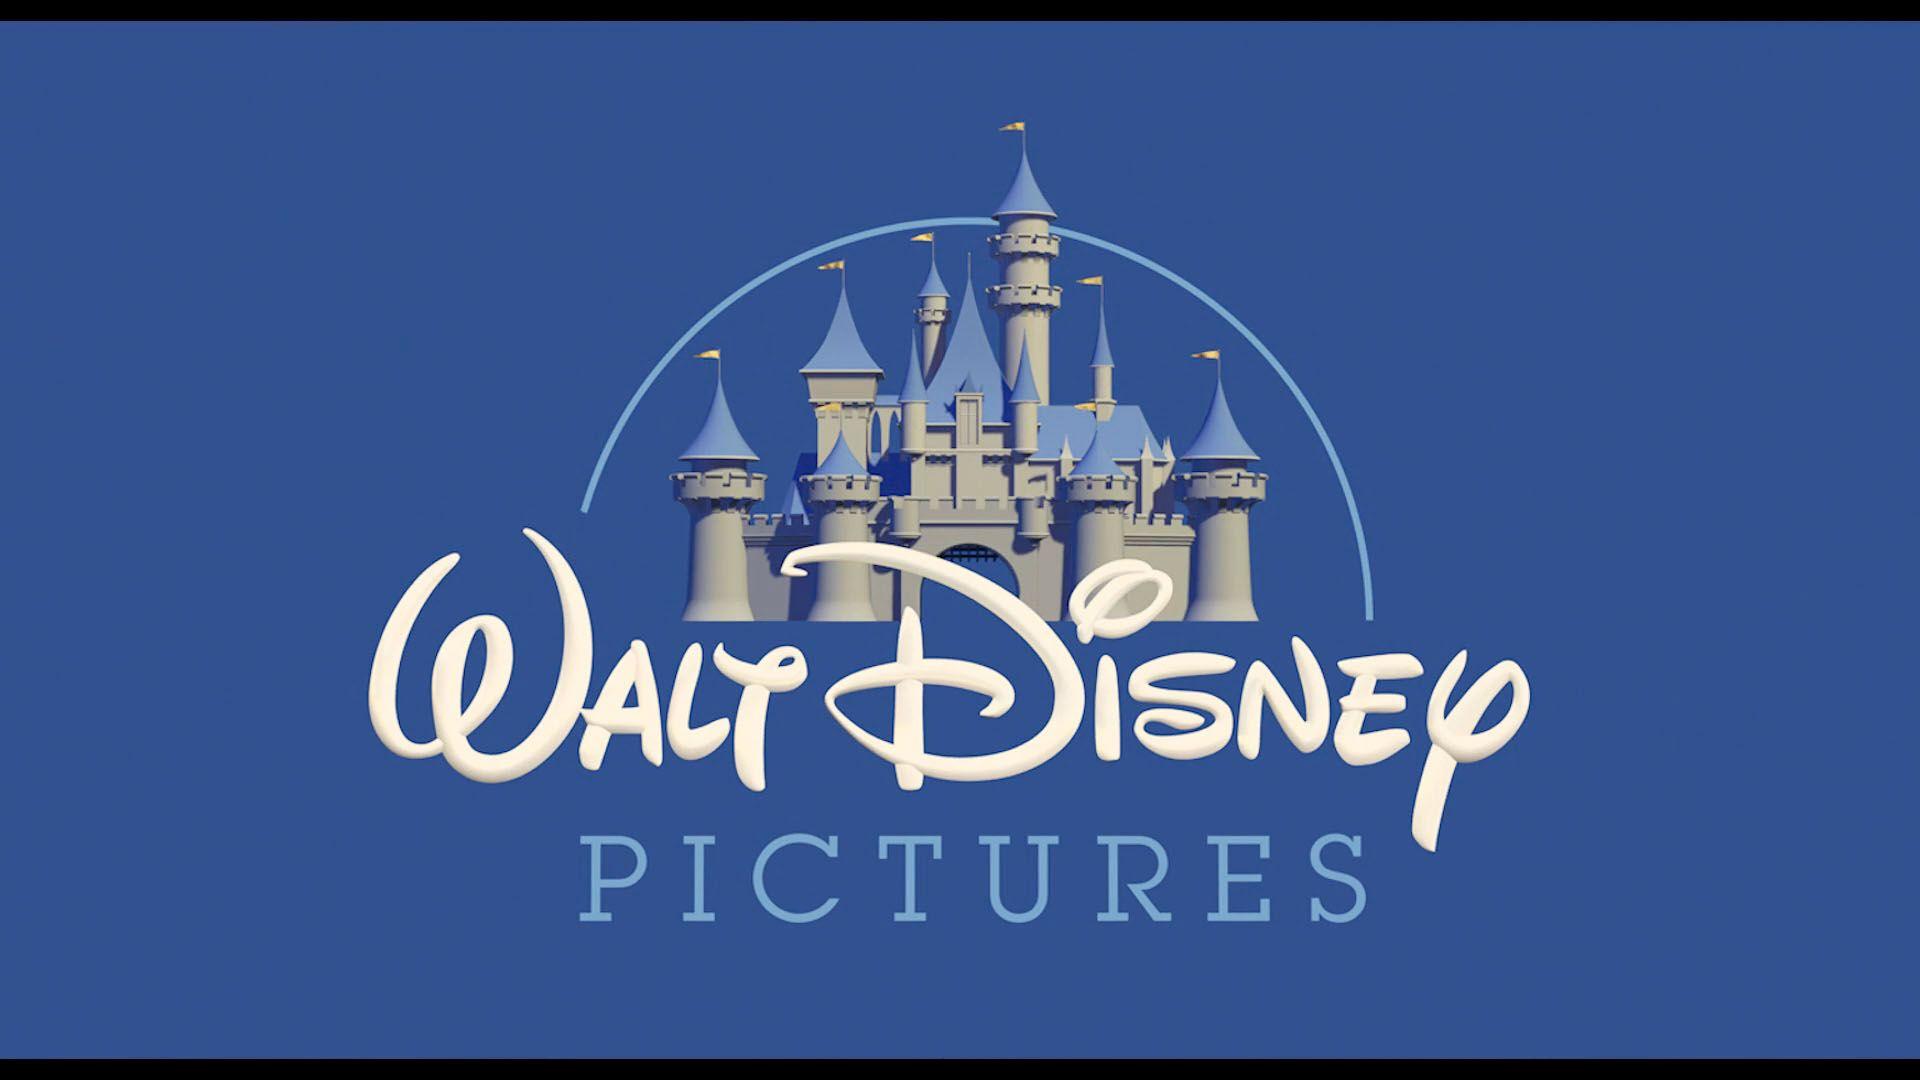 Old Walt Disney Logo - Walt Disney Picture from 'Monsters, Inc.' (2001). Disney. Disney